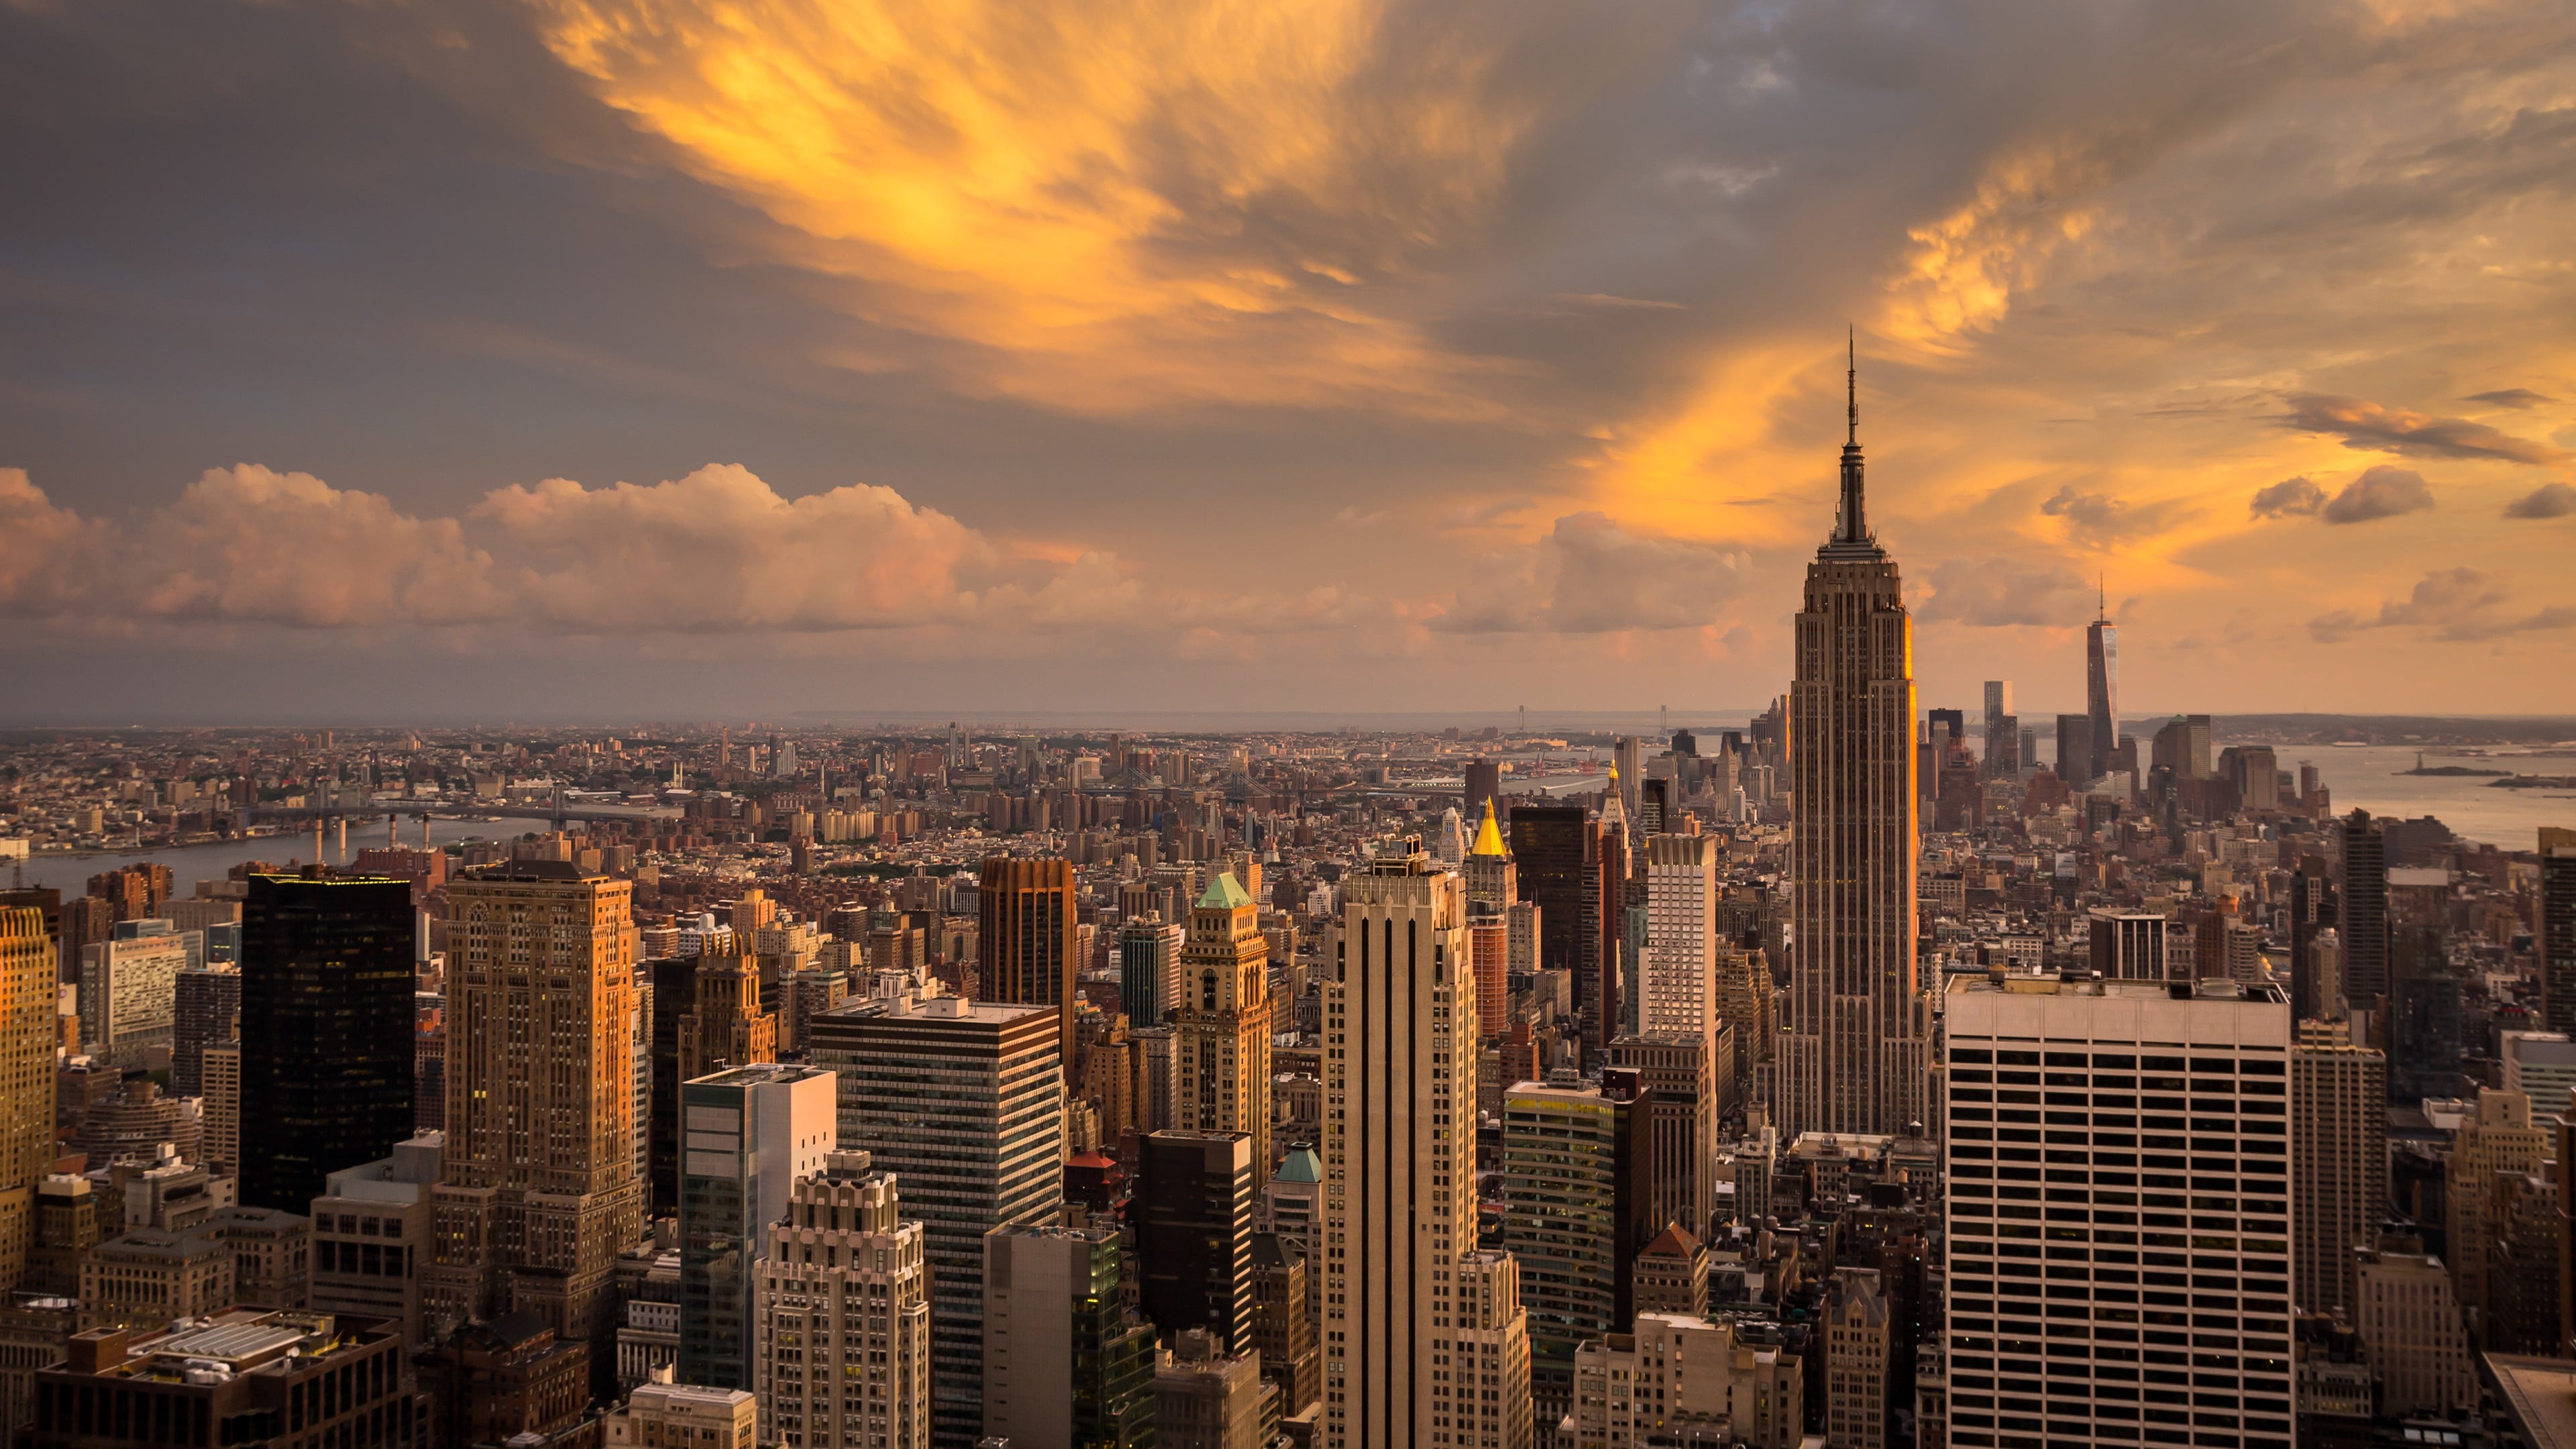 Empire State building, landscape, clouds, city, Manhattan, sunset